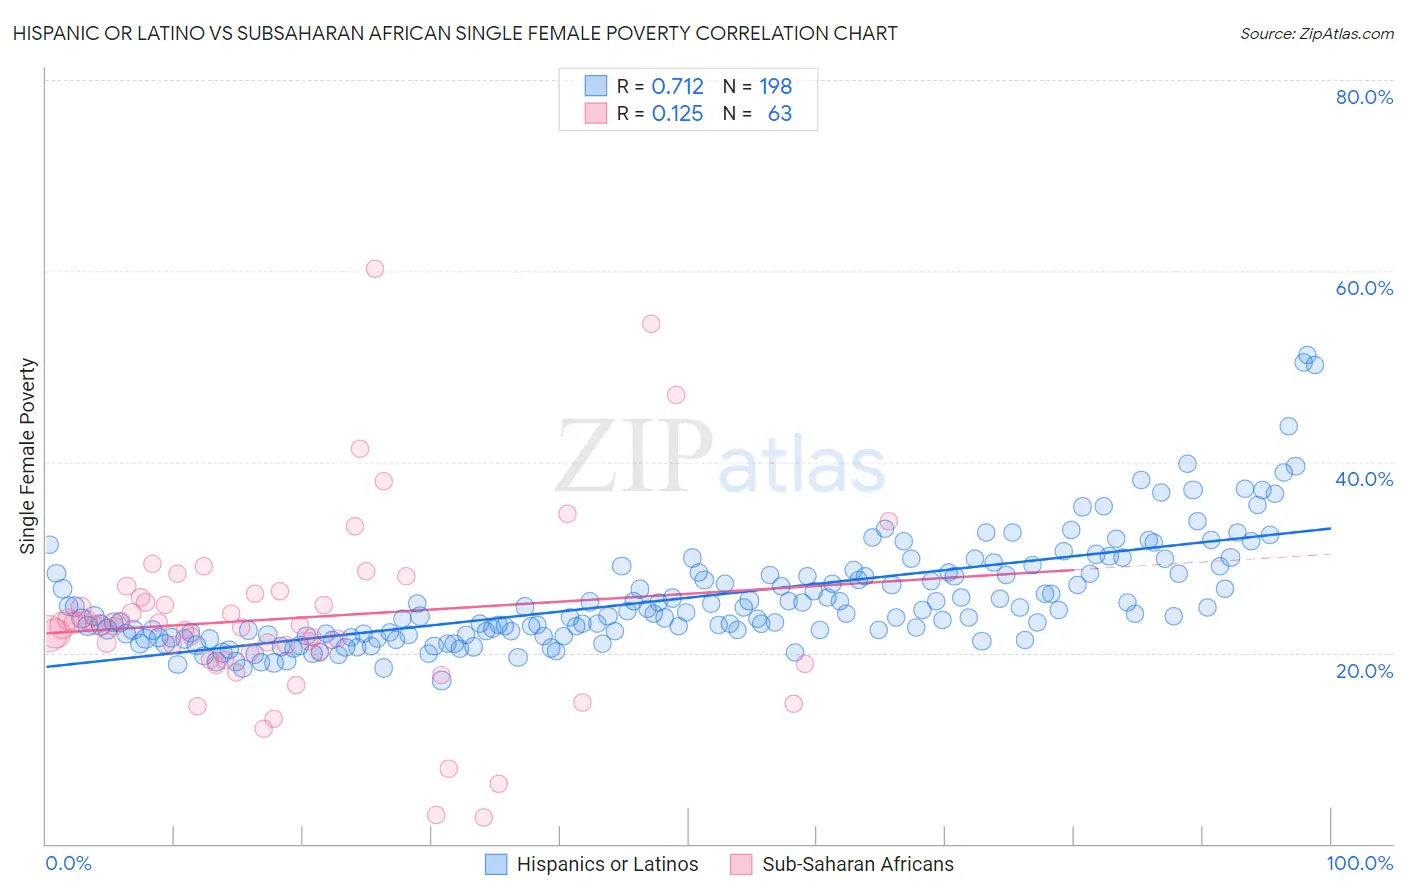 Hispanic or Latino vs Subsaharan African Single Female Poverty